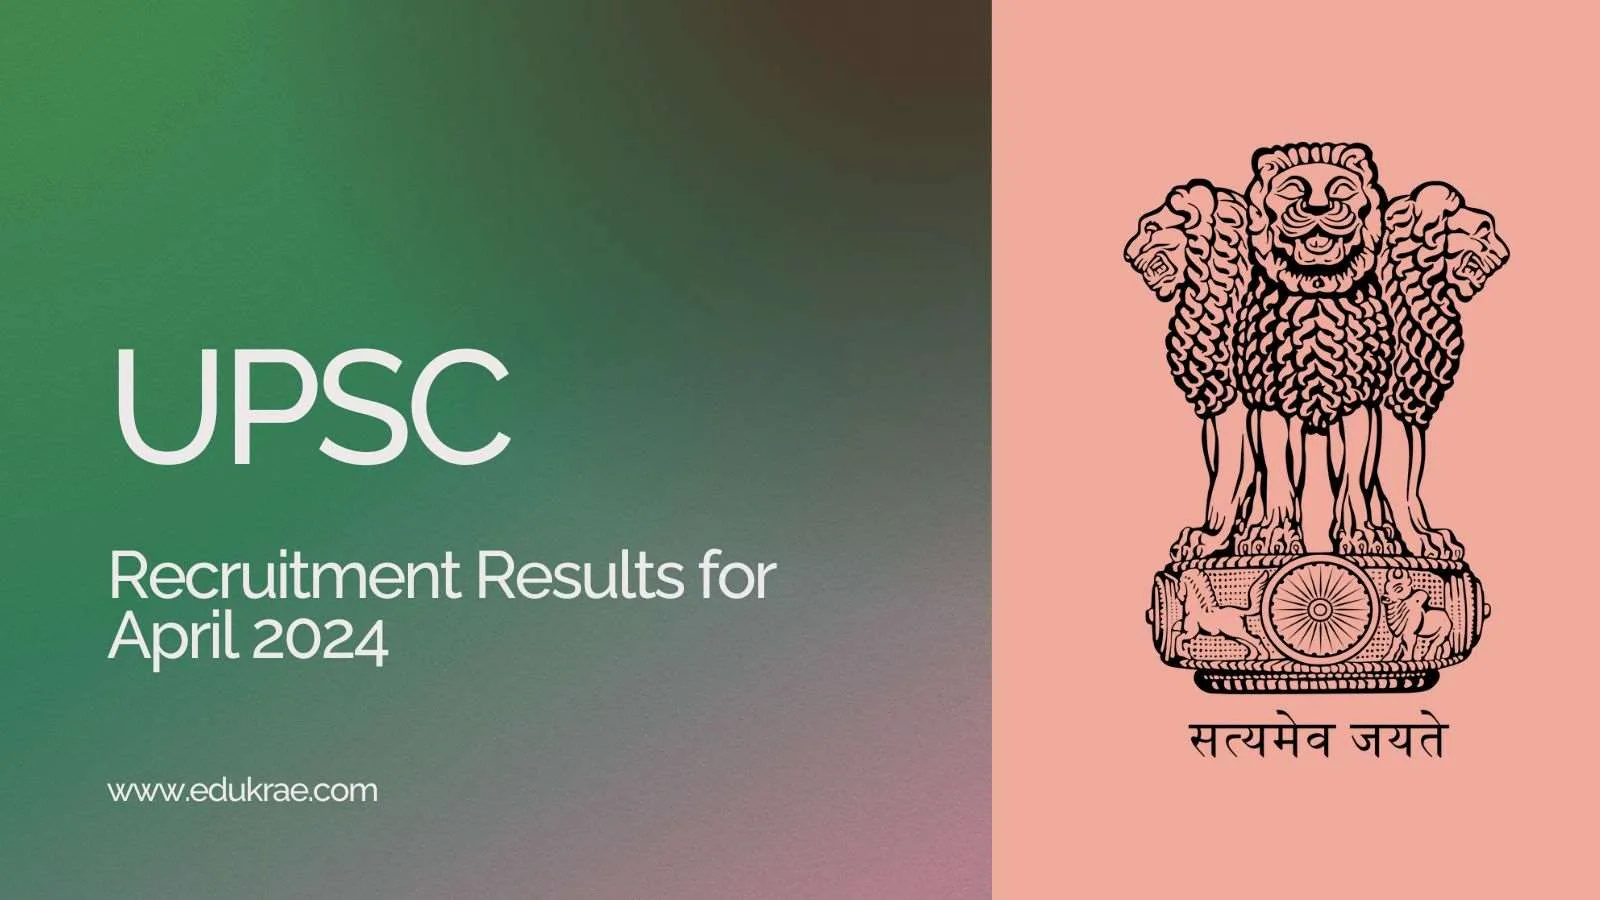 UPSC Announces Recruitment Results for April 2024 Positions